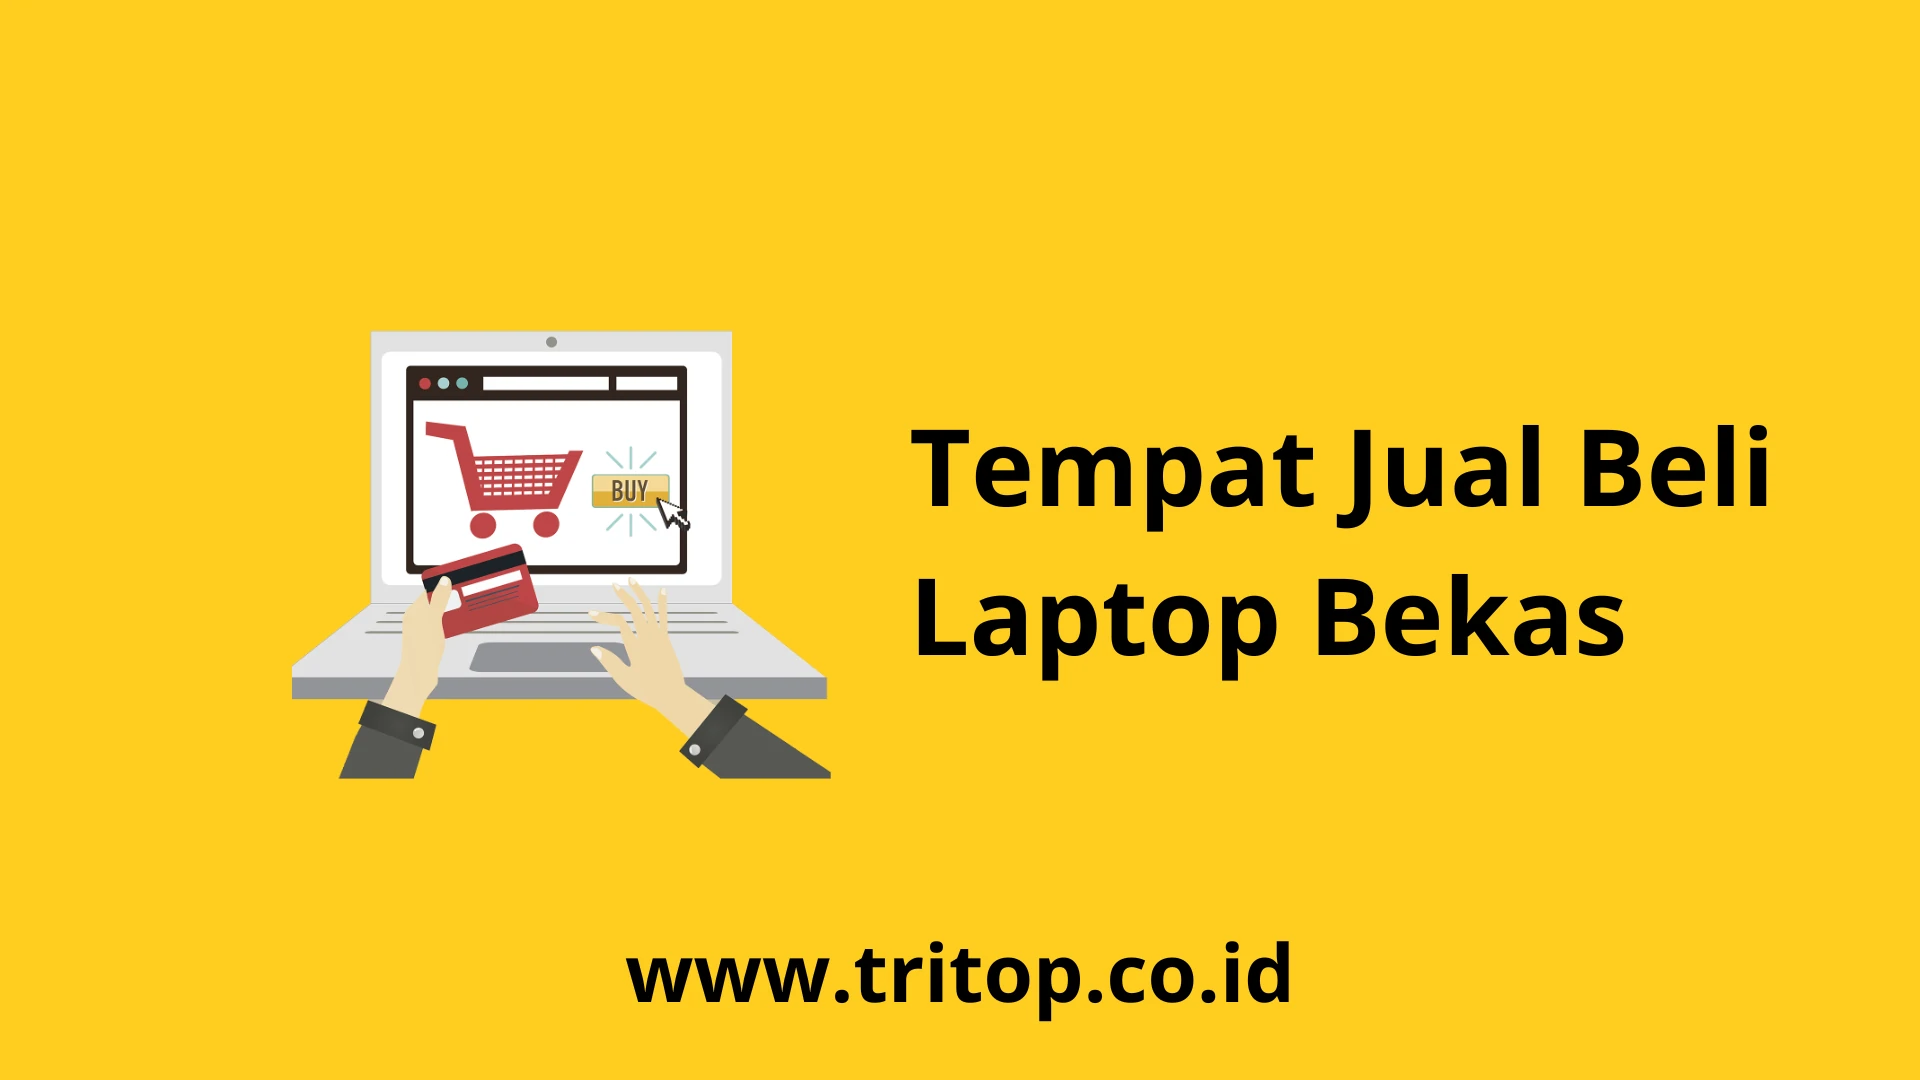 Mau Jual Laptop Bekas Dimana Tritop.co.id